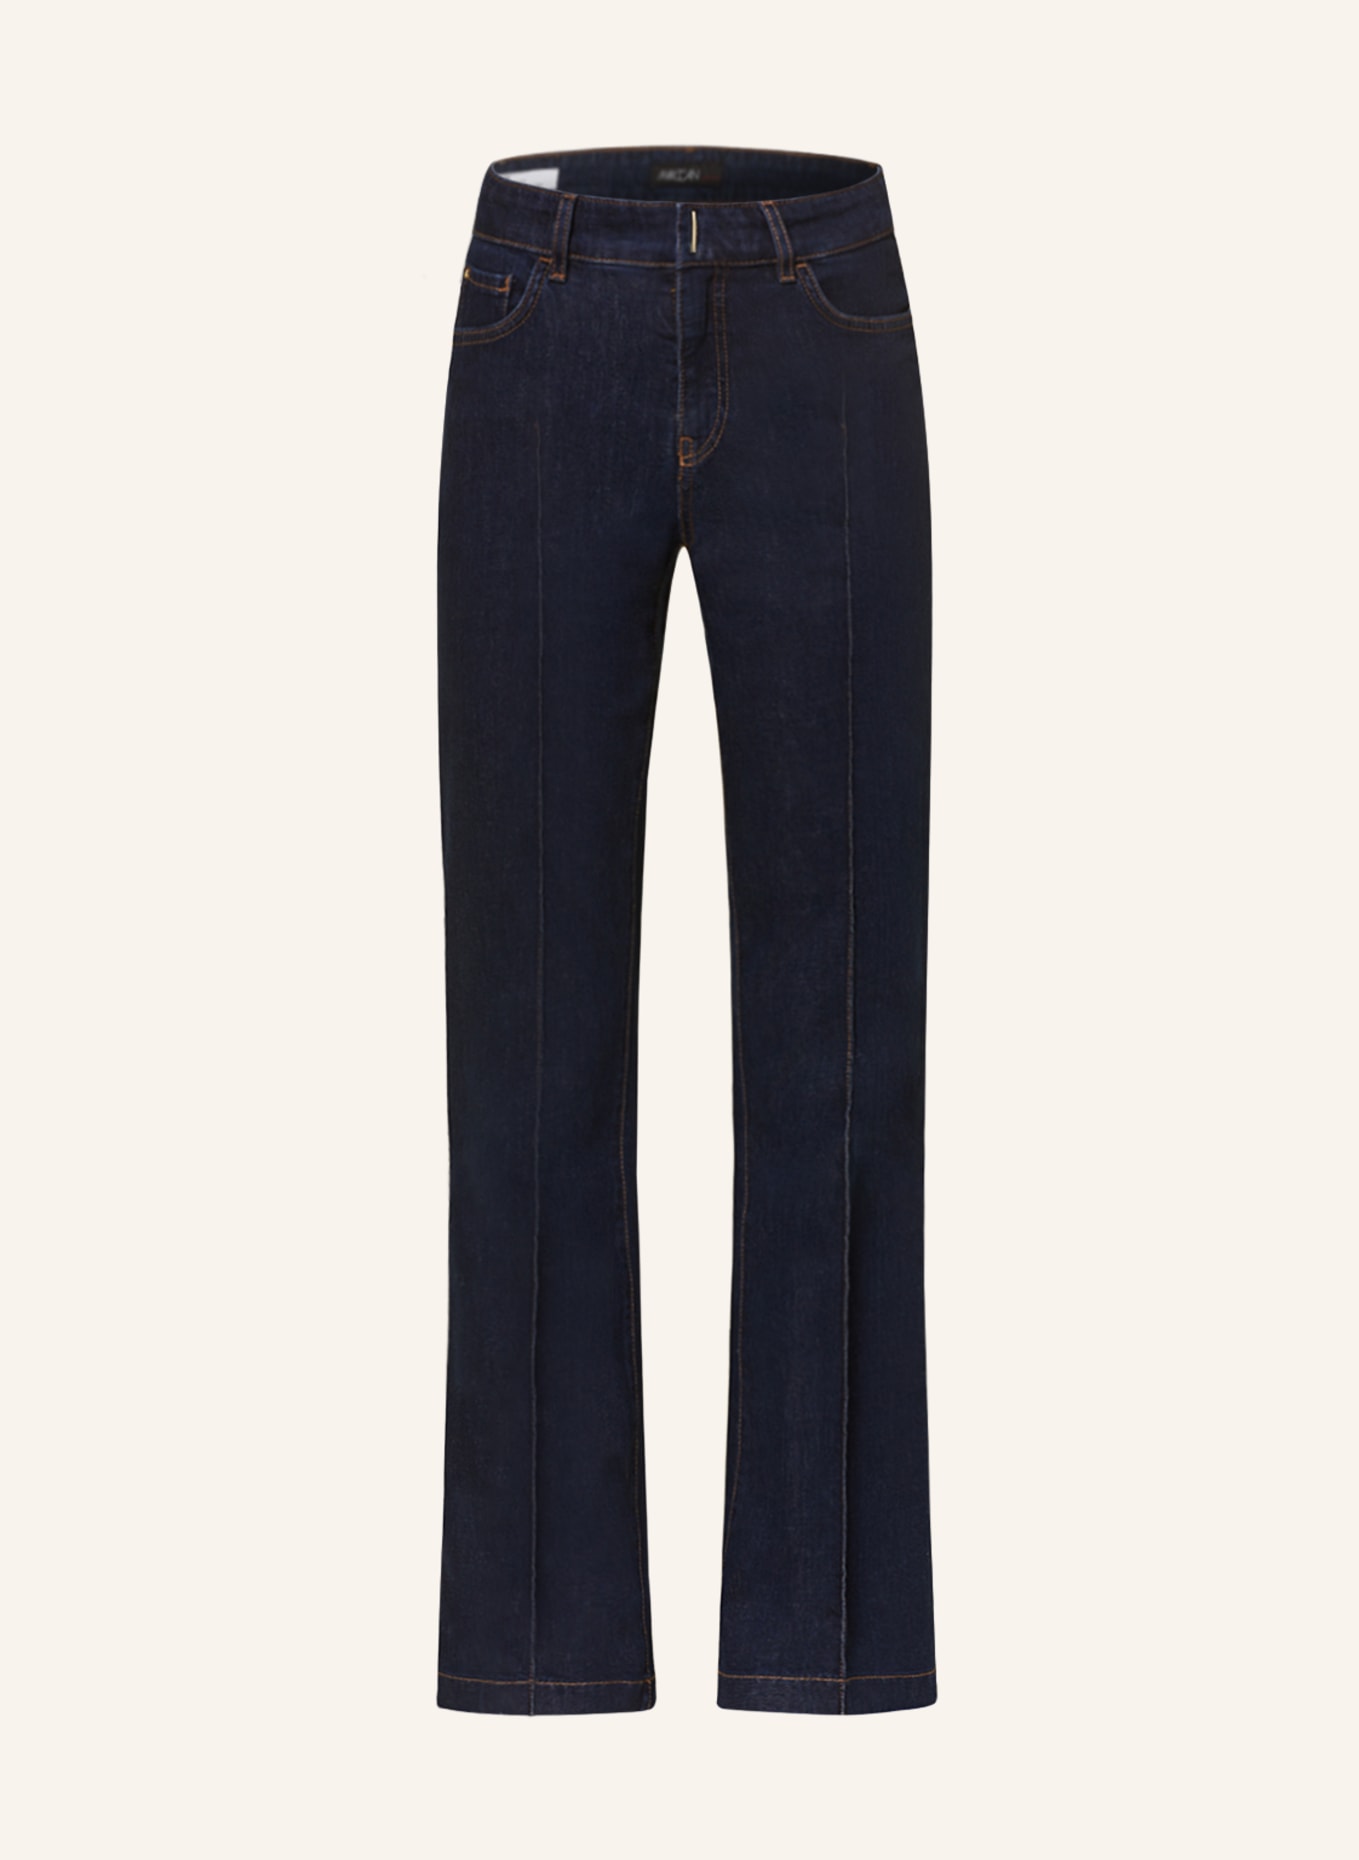 MARC CAIN Flared Jeans FARO, Farbe: 357 vintage indigo (Bild 1)